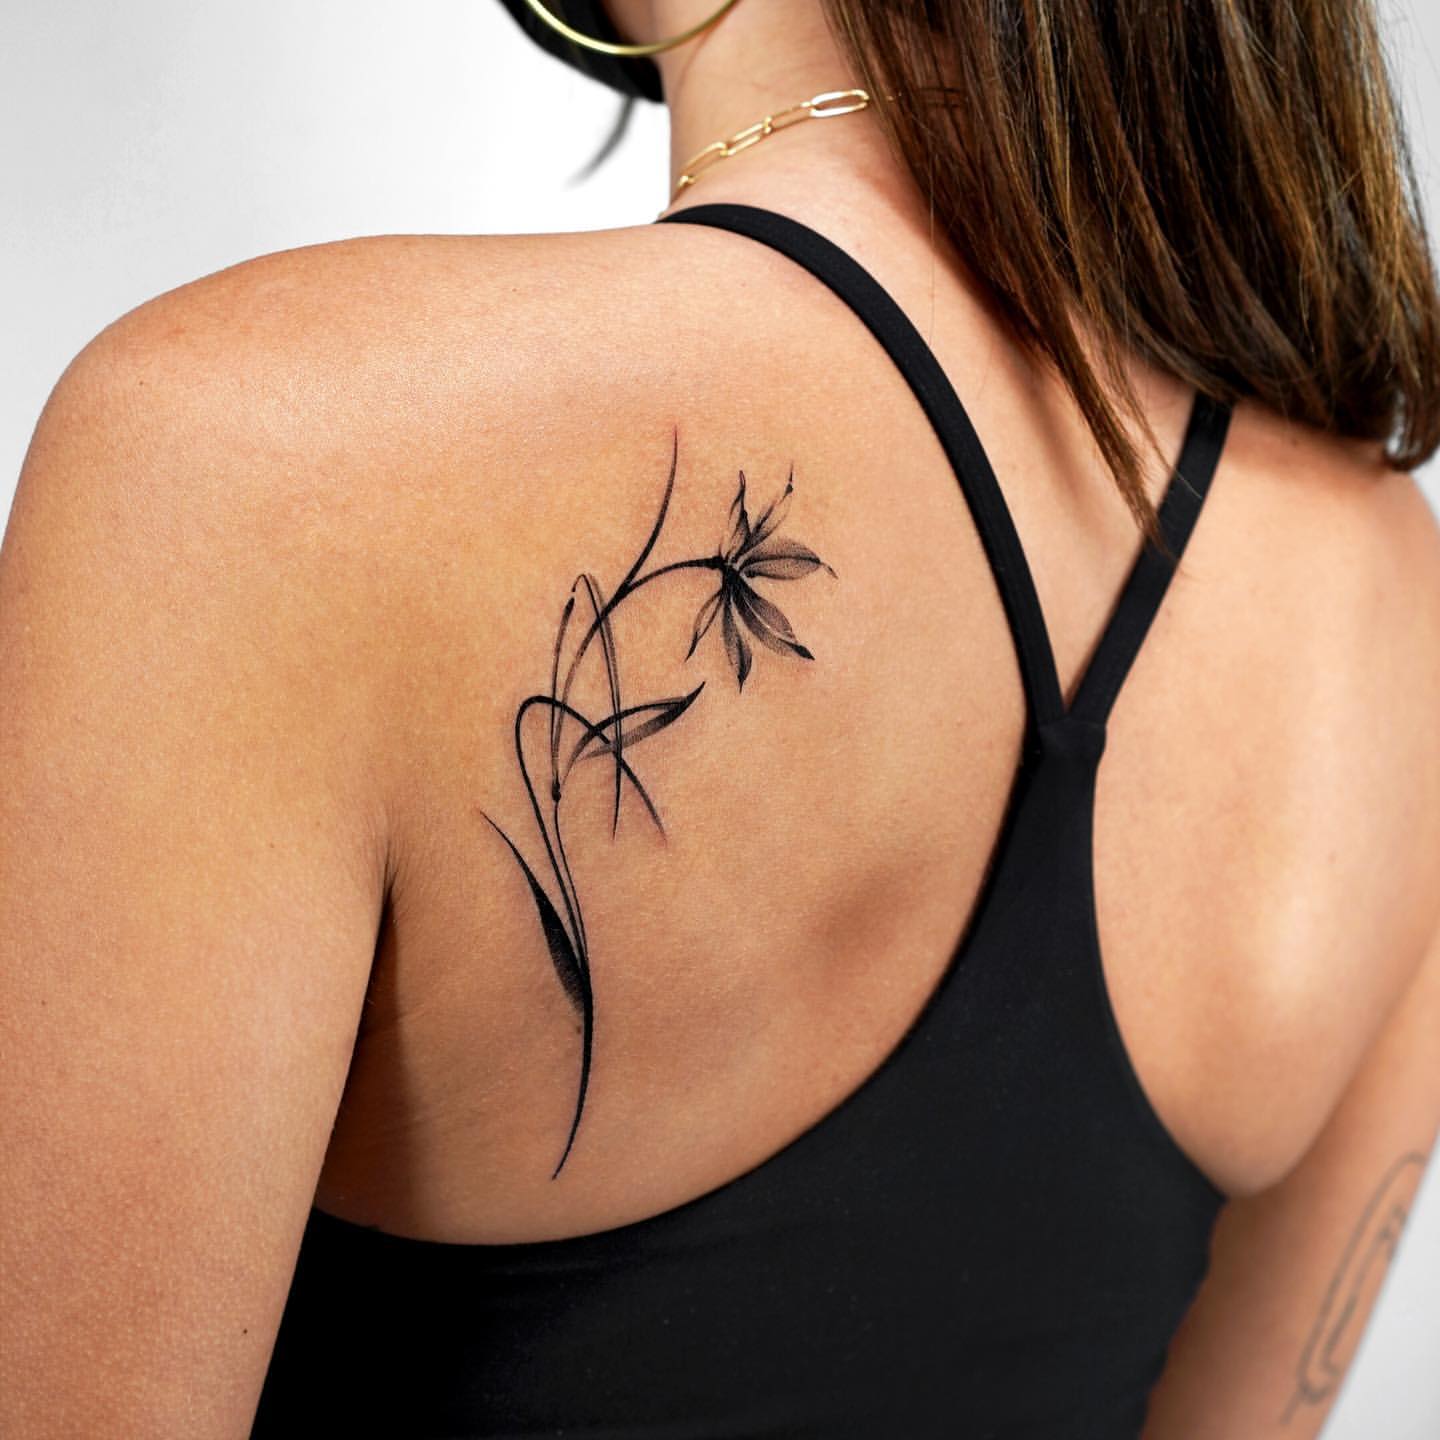 Back Tattoo Ideas for Women 27